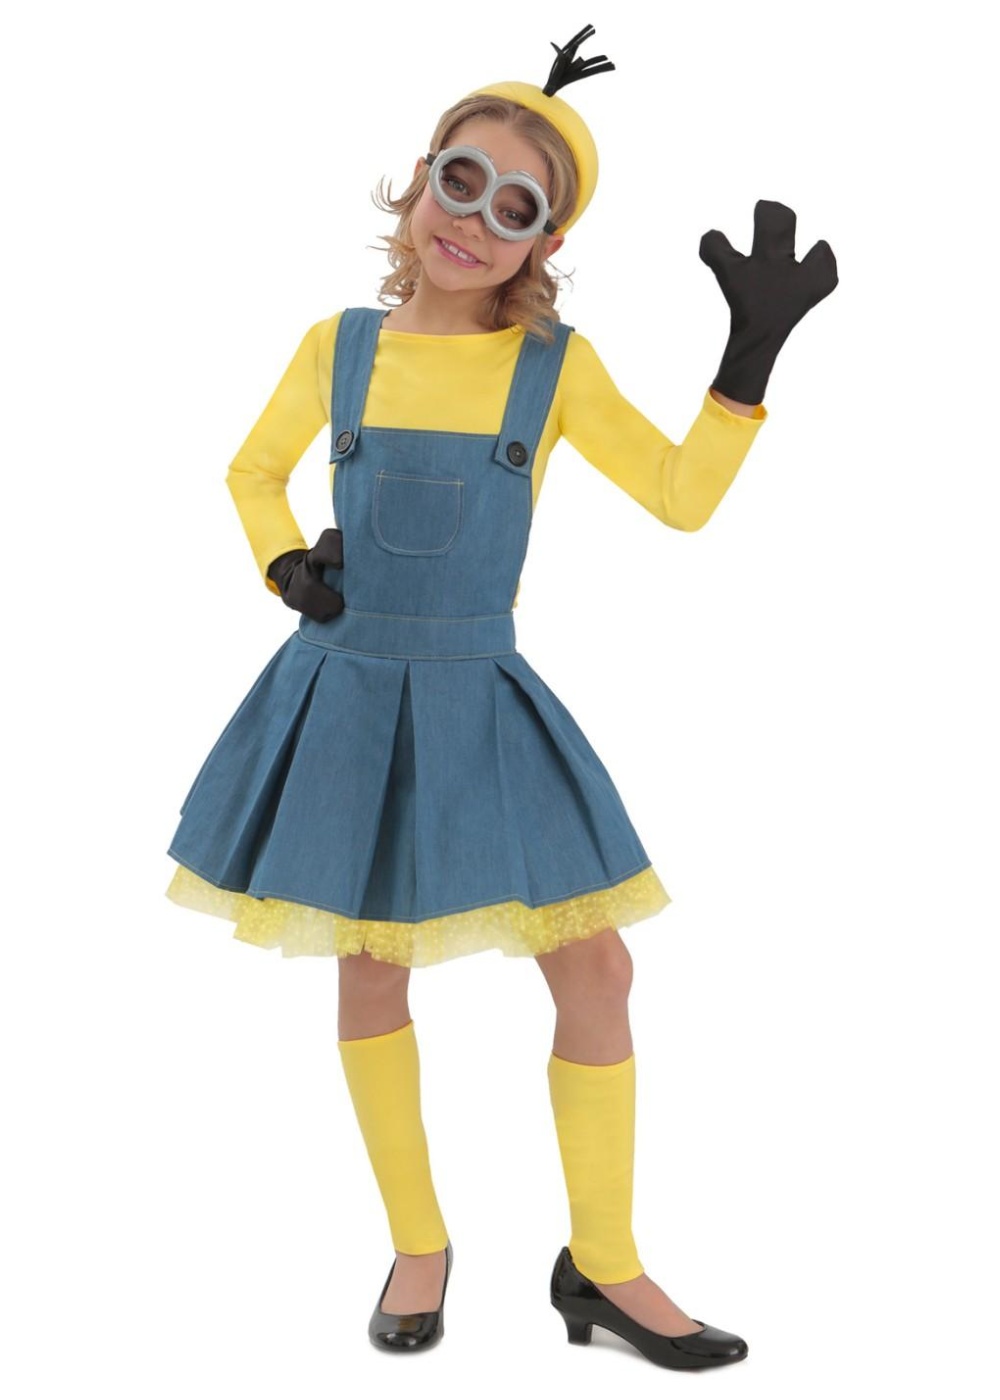  Girls Minions Jumper Costume